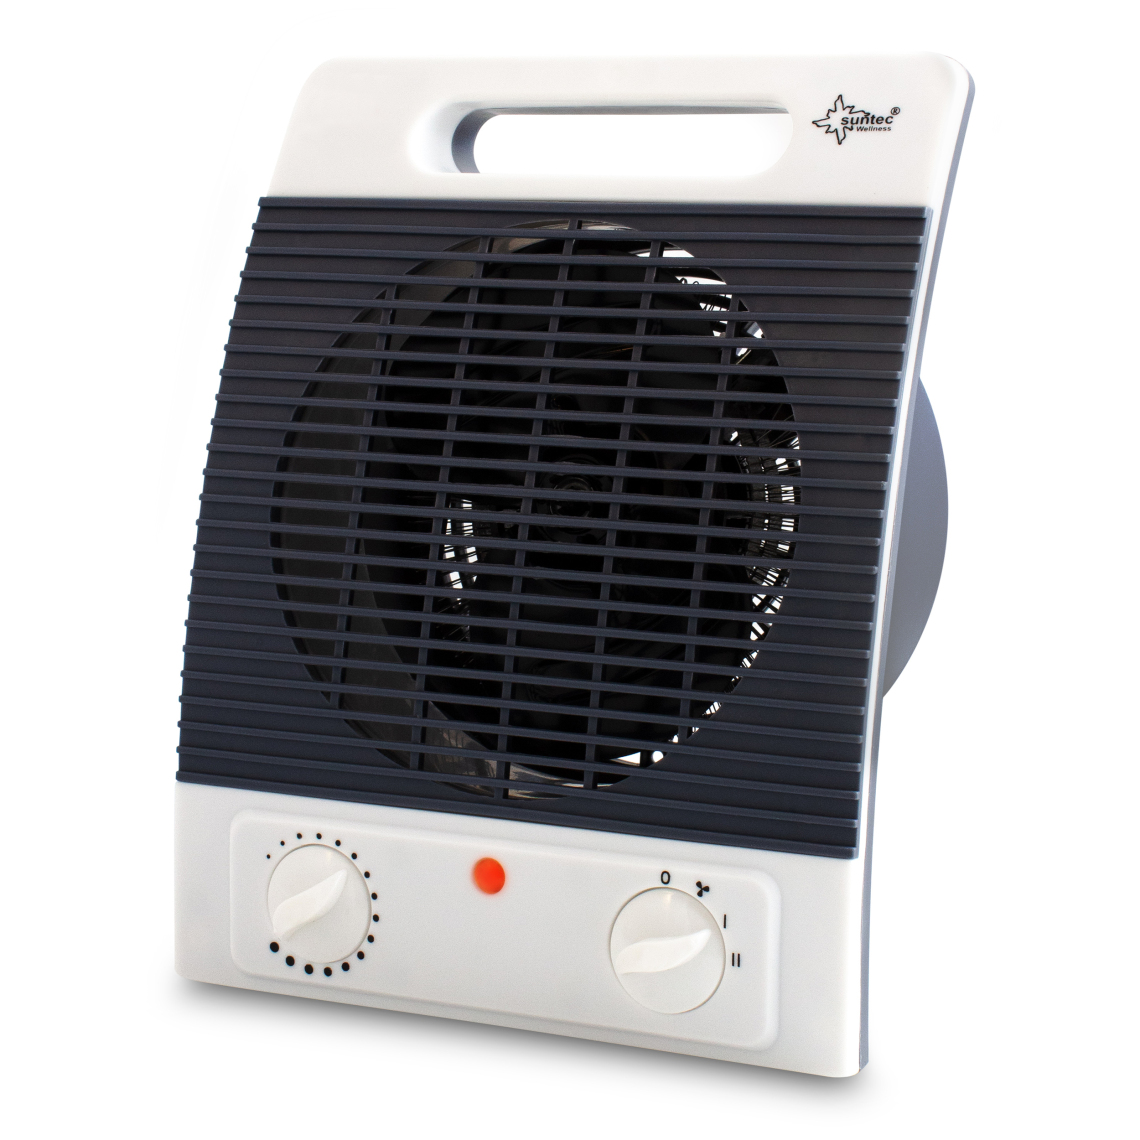 Suntec - Chauffage soufflant d'appoint Airbooster Design 2000, thermostat réglable, protection IP21, (~25m²) - Chauffage électrique